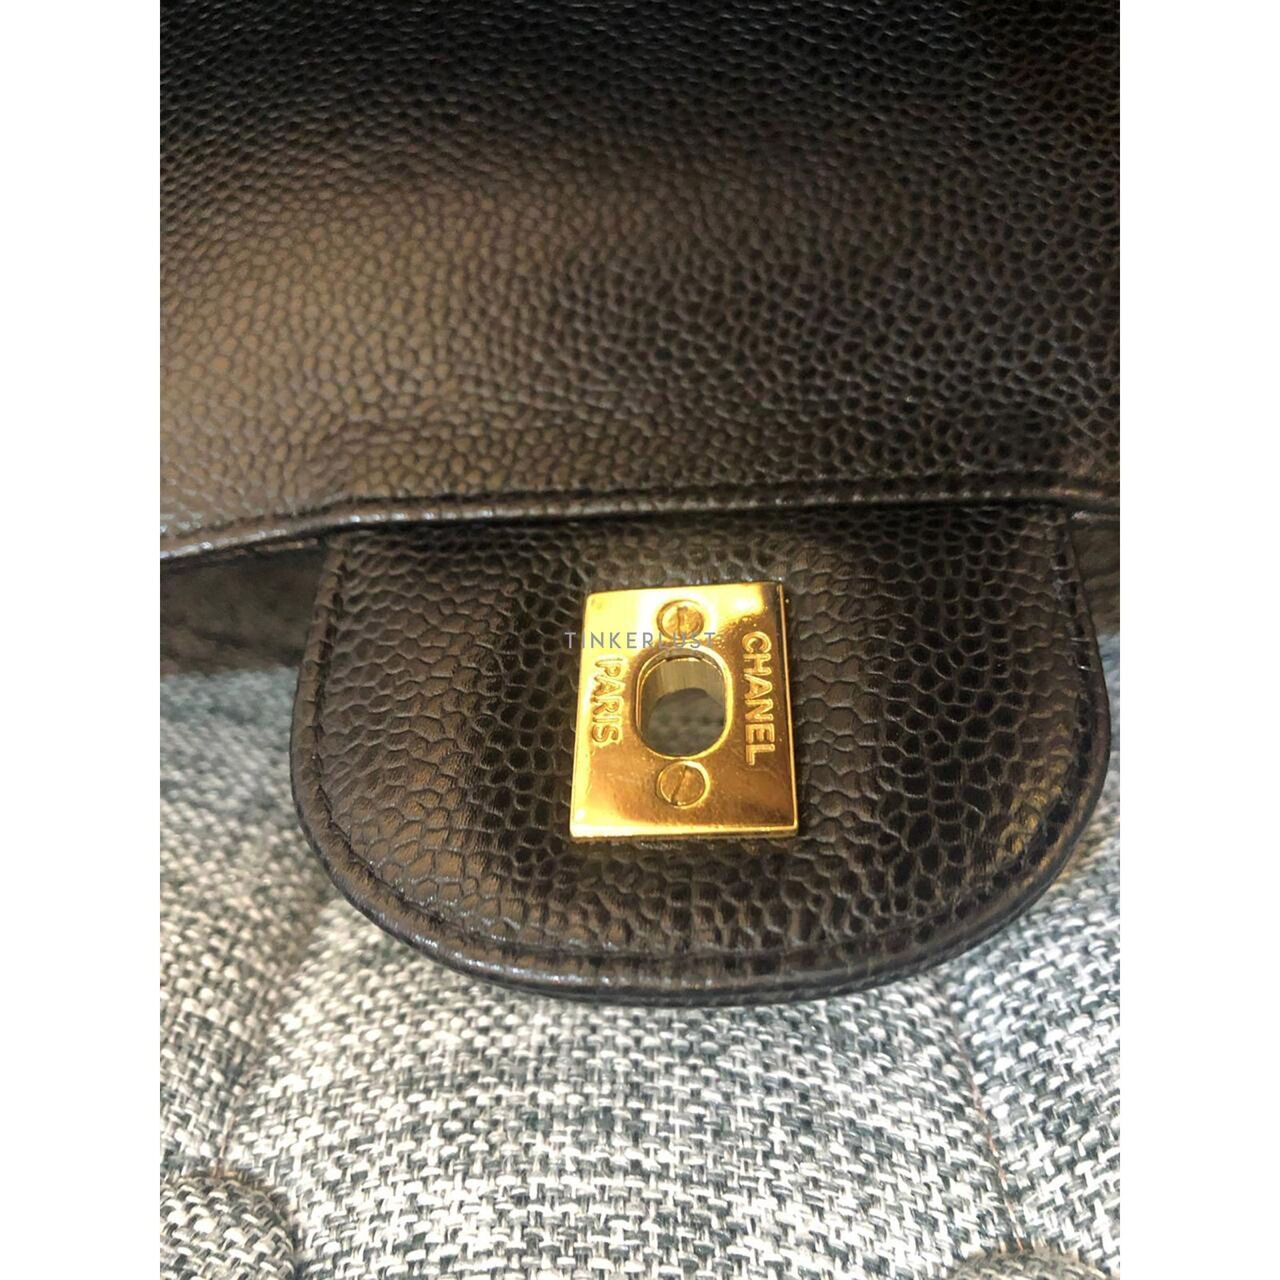 Chanel Classic Maxi Black Caviar Double Flap GHW #26 Shoulder Bag